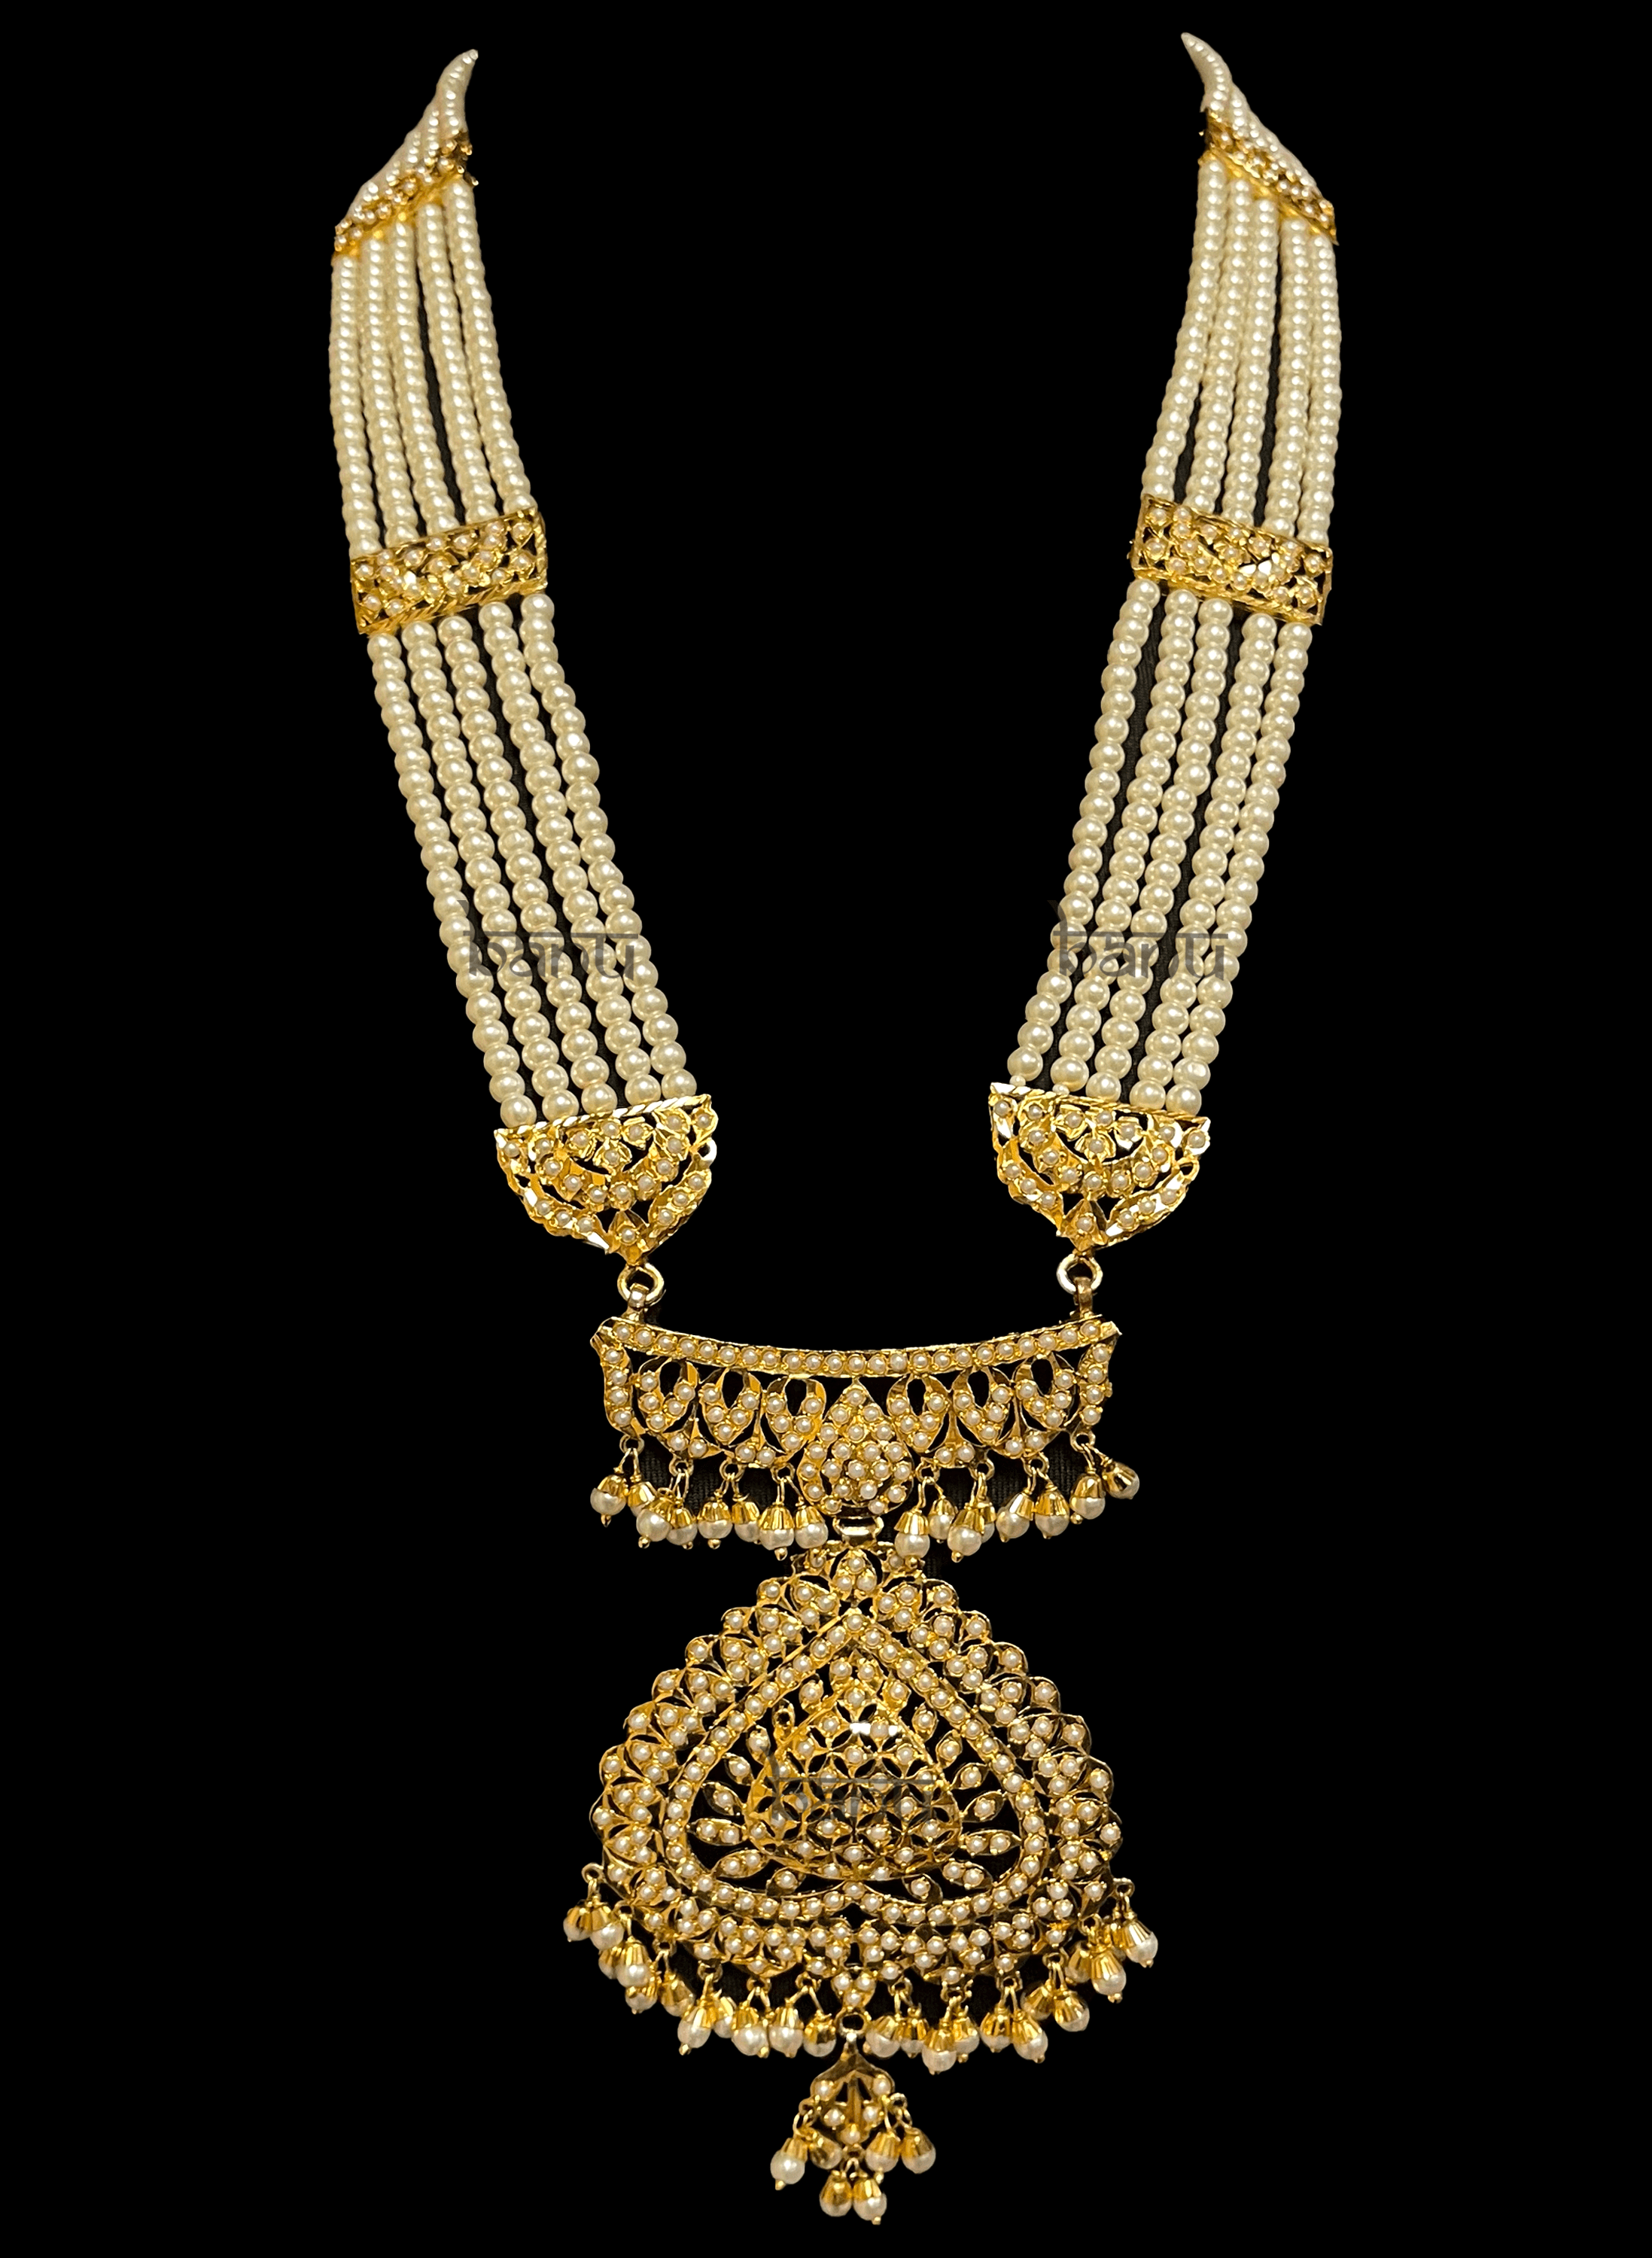  Long Jadau pearl necklace & pendant